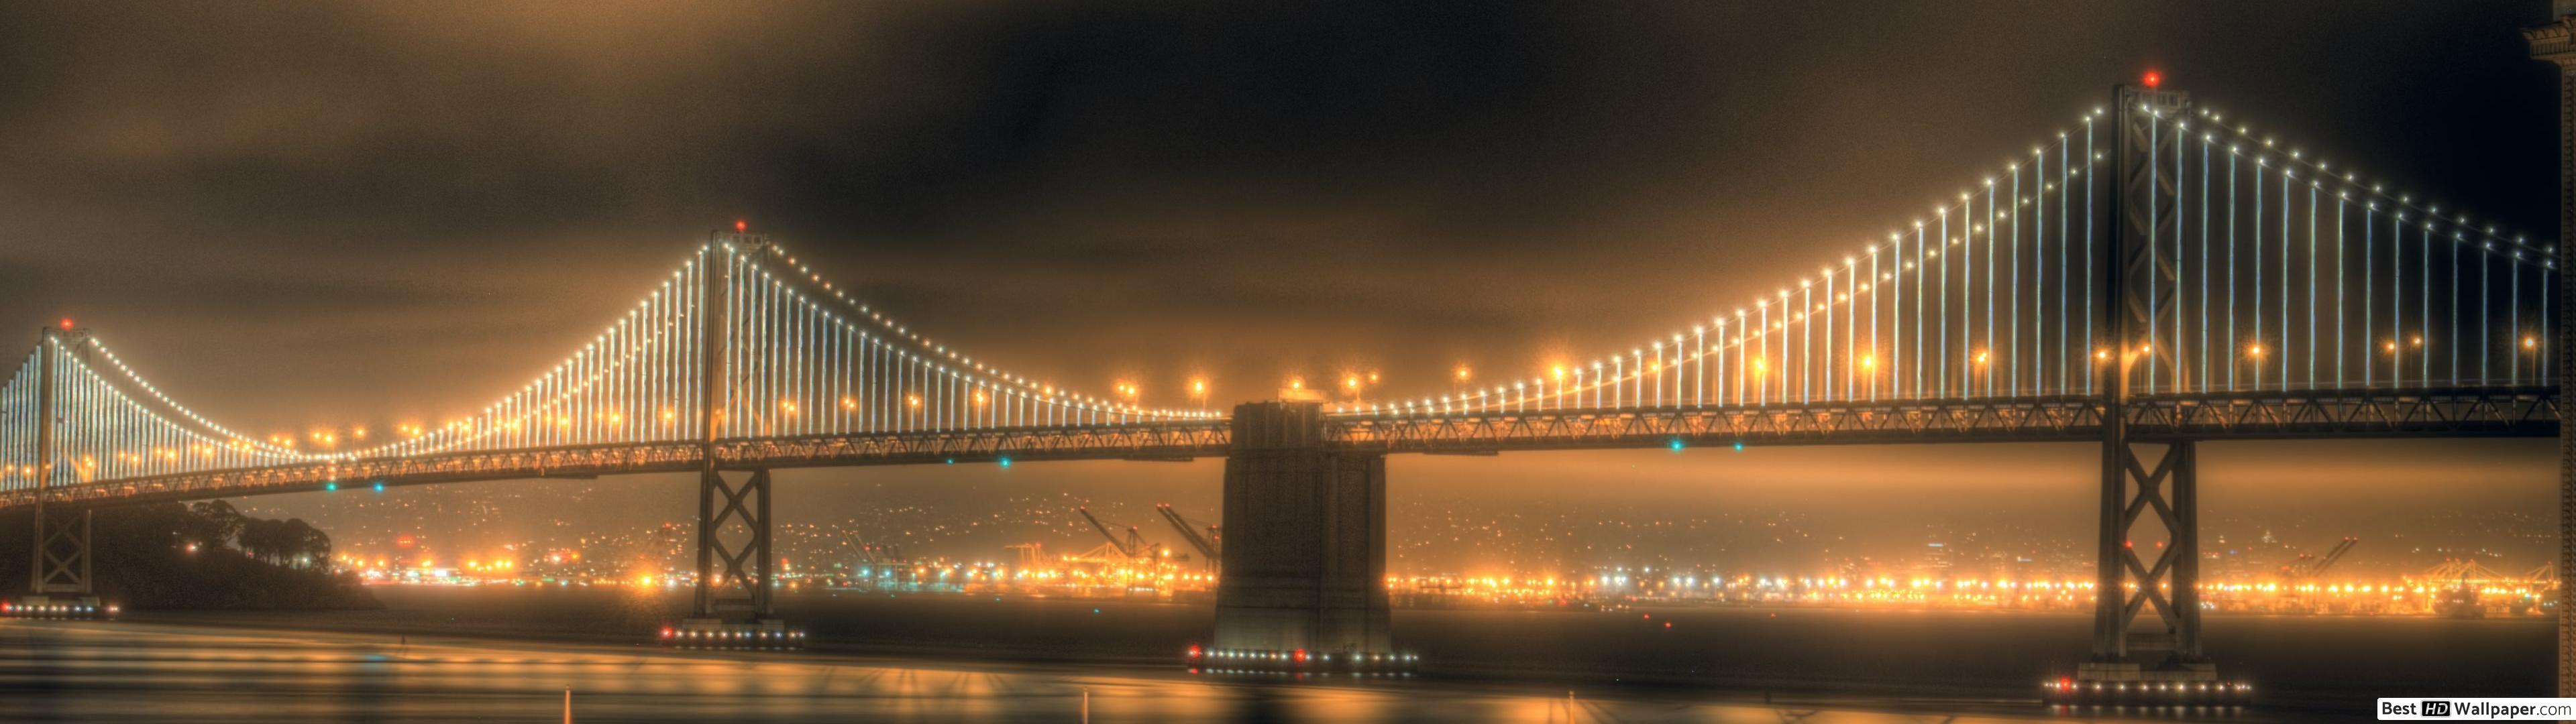 Oakland Bay Bridge HD wallpaper download